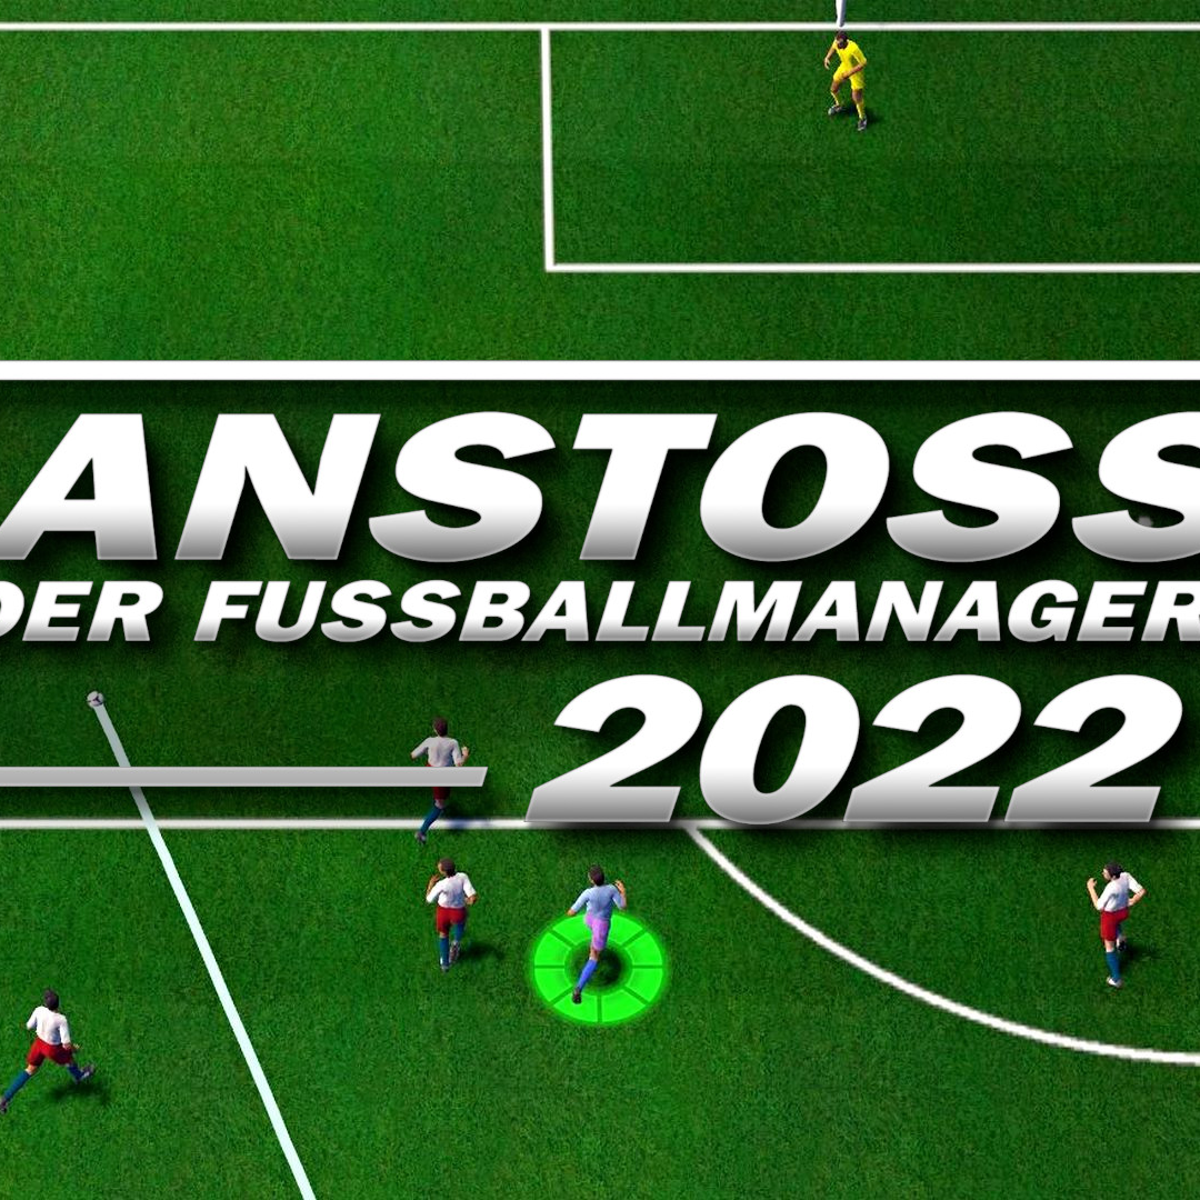 Anstoss 2022 heißt jetzt nur noch Anstoss - Der Fussballmanager